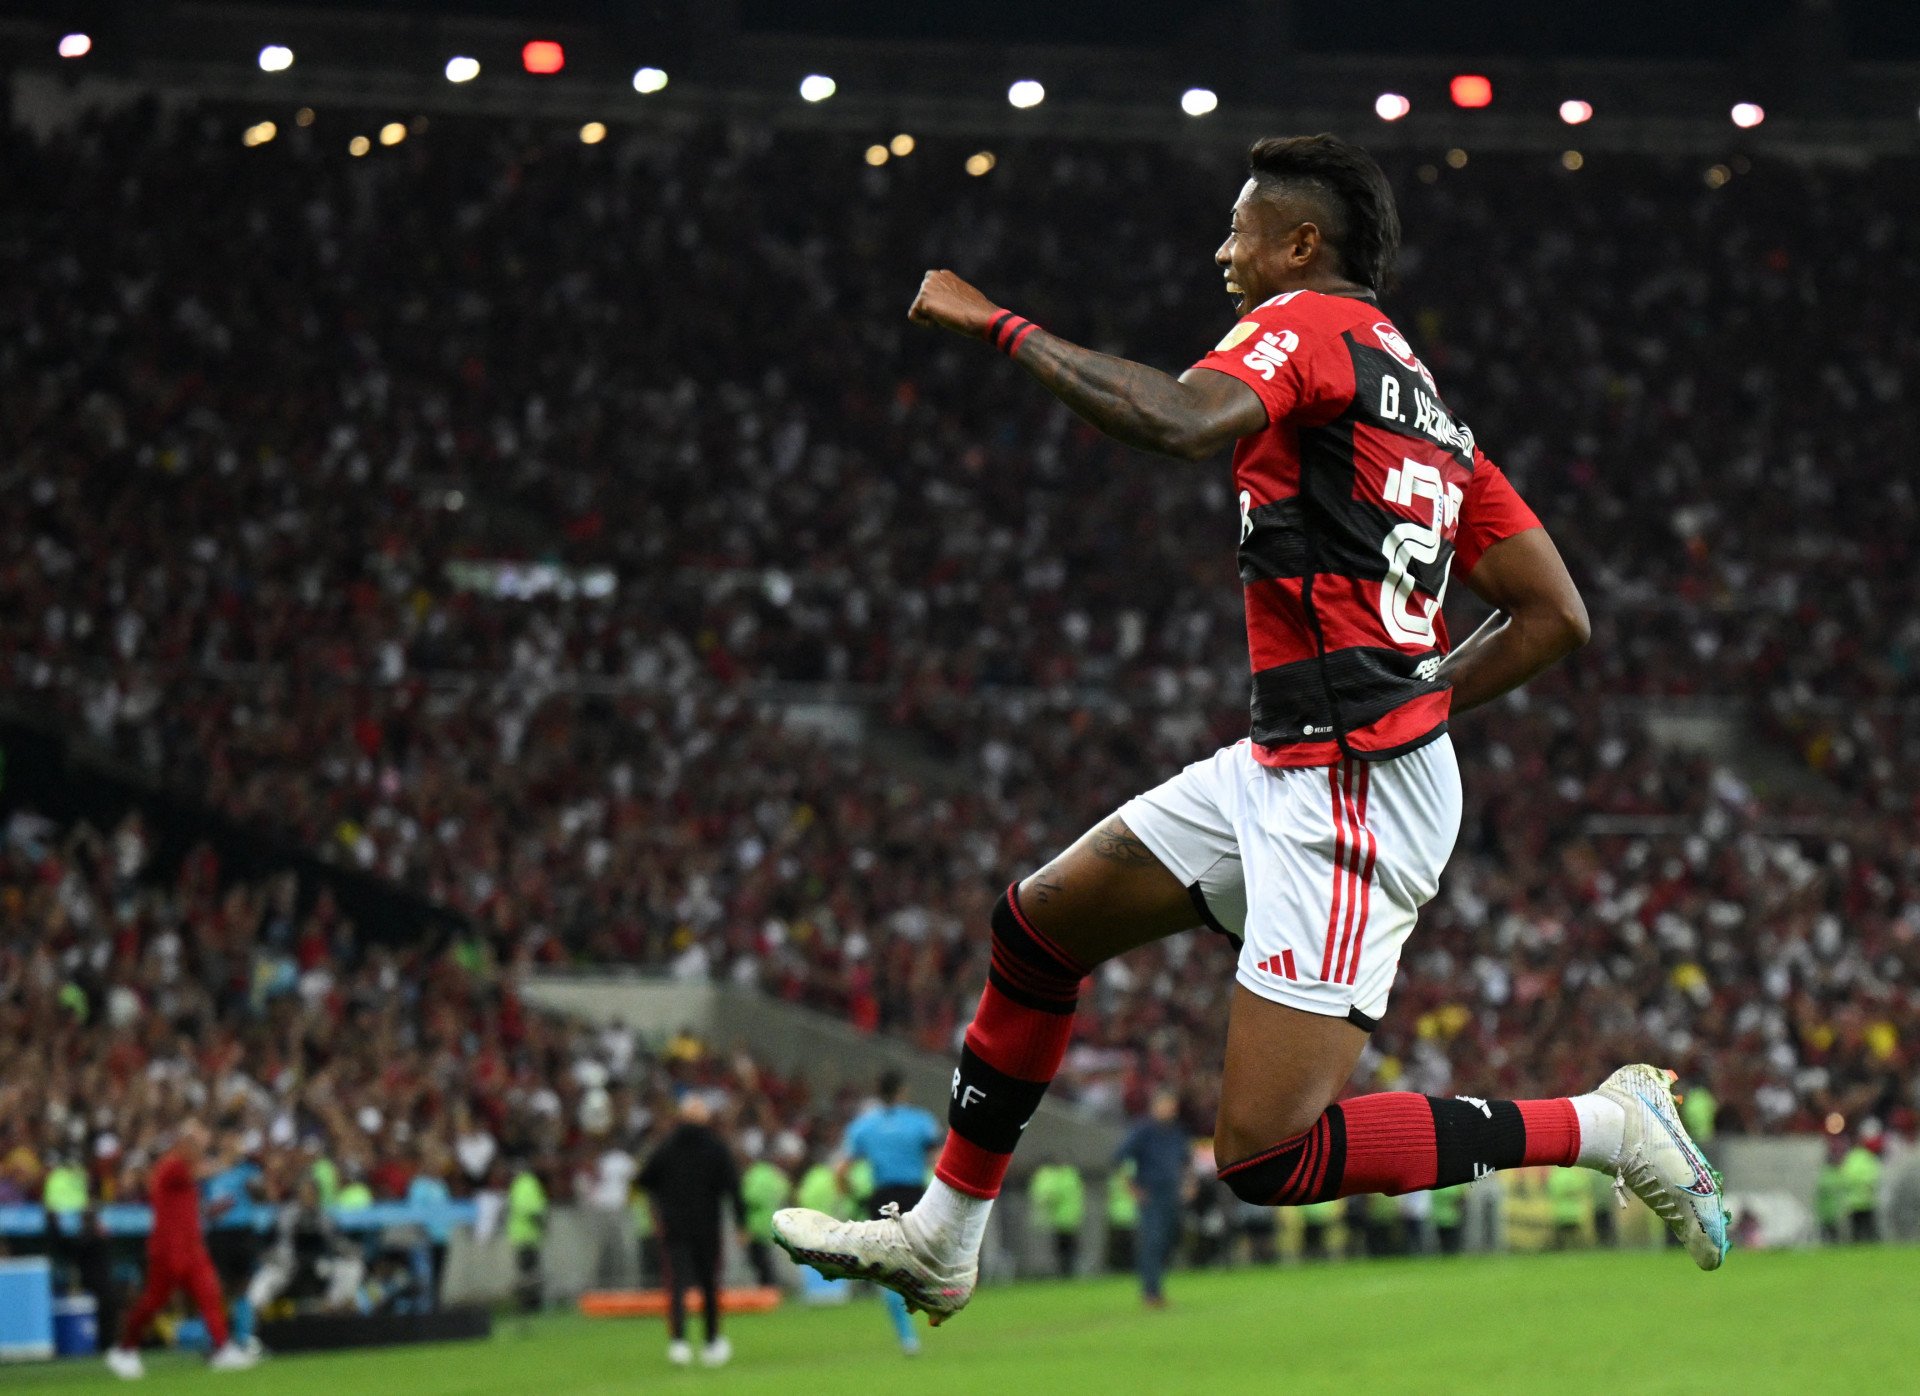 Bruno Henrique comemora gol marcado no jogo entre Flamengo e Aucas - Foto: CARL DE SOUZA / AFP